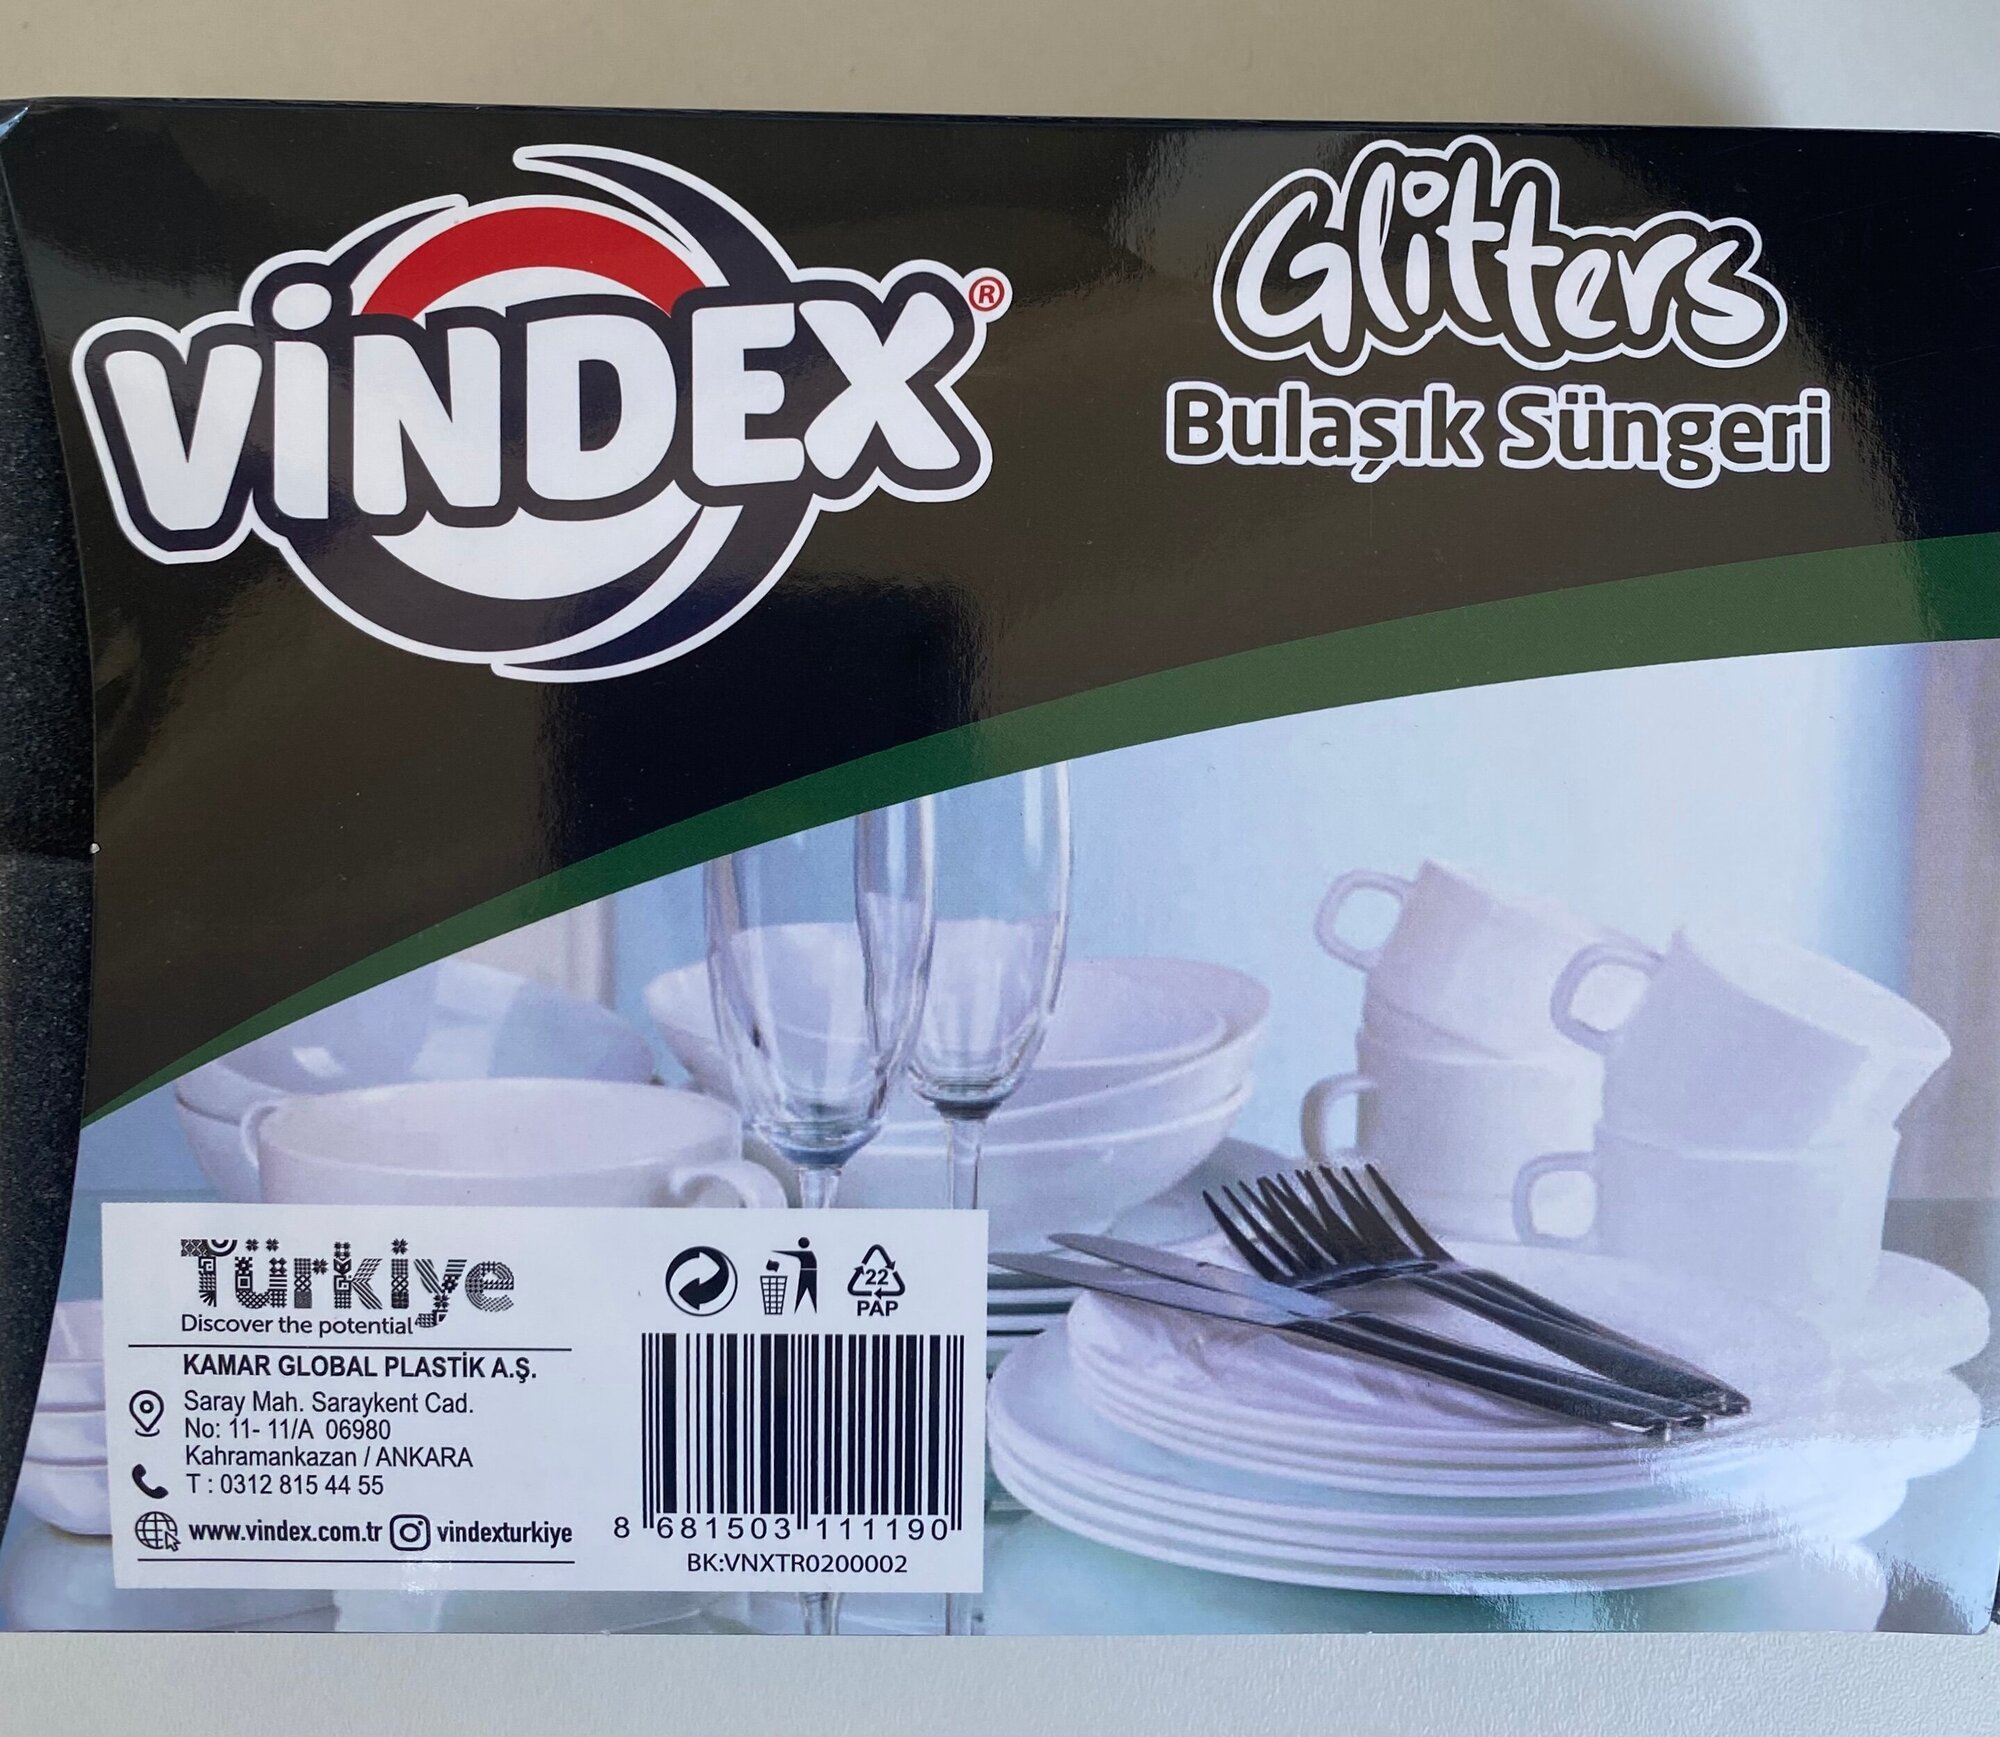 ViNDEX Glitters Турецкая губка для мытья посуды 4шт. - фотография № 1